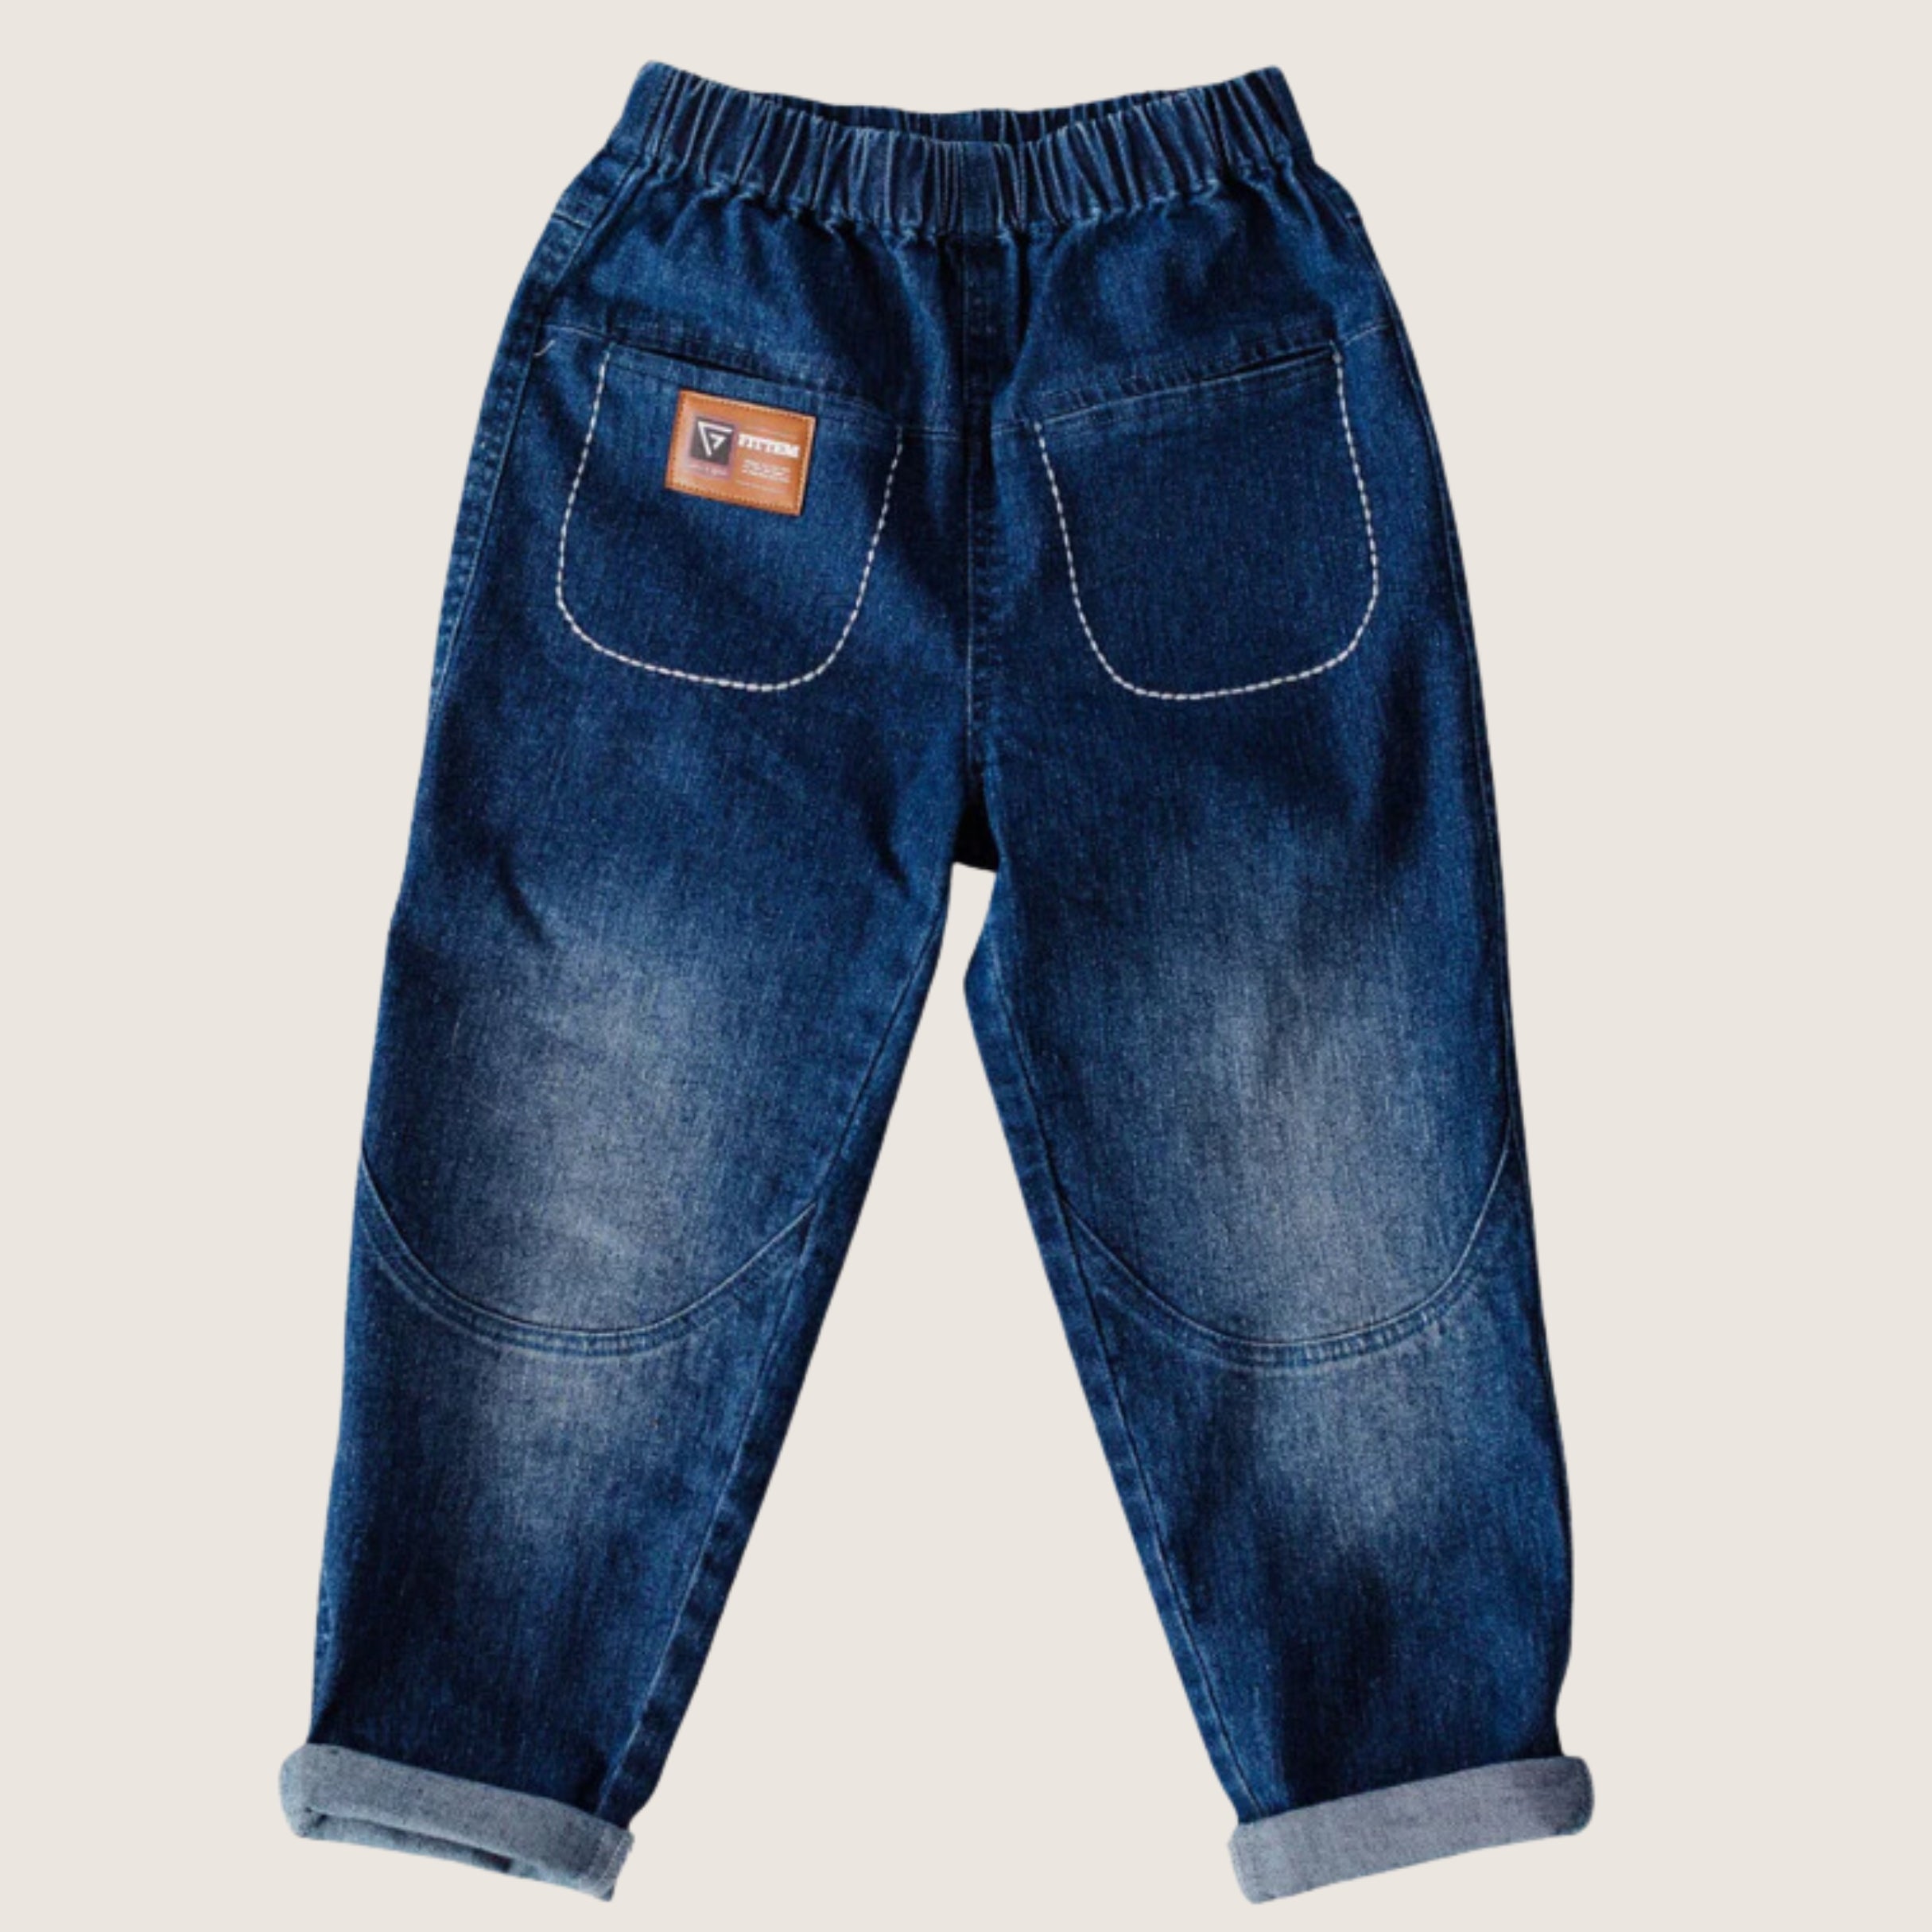 KIDSCOOL SPACE Big Boys Jeans,Kids Elastic Band Inside Ripped Denim Pants,Light  Blue,9-10 Years - Walmart.com